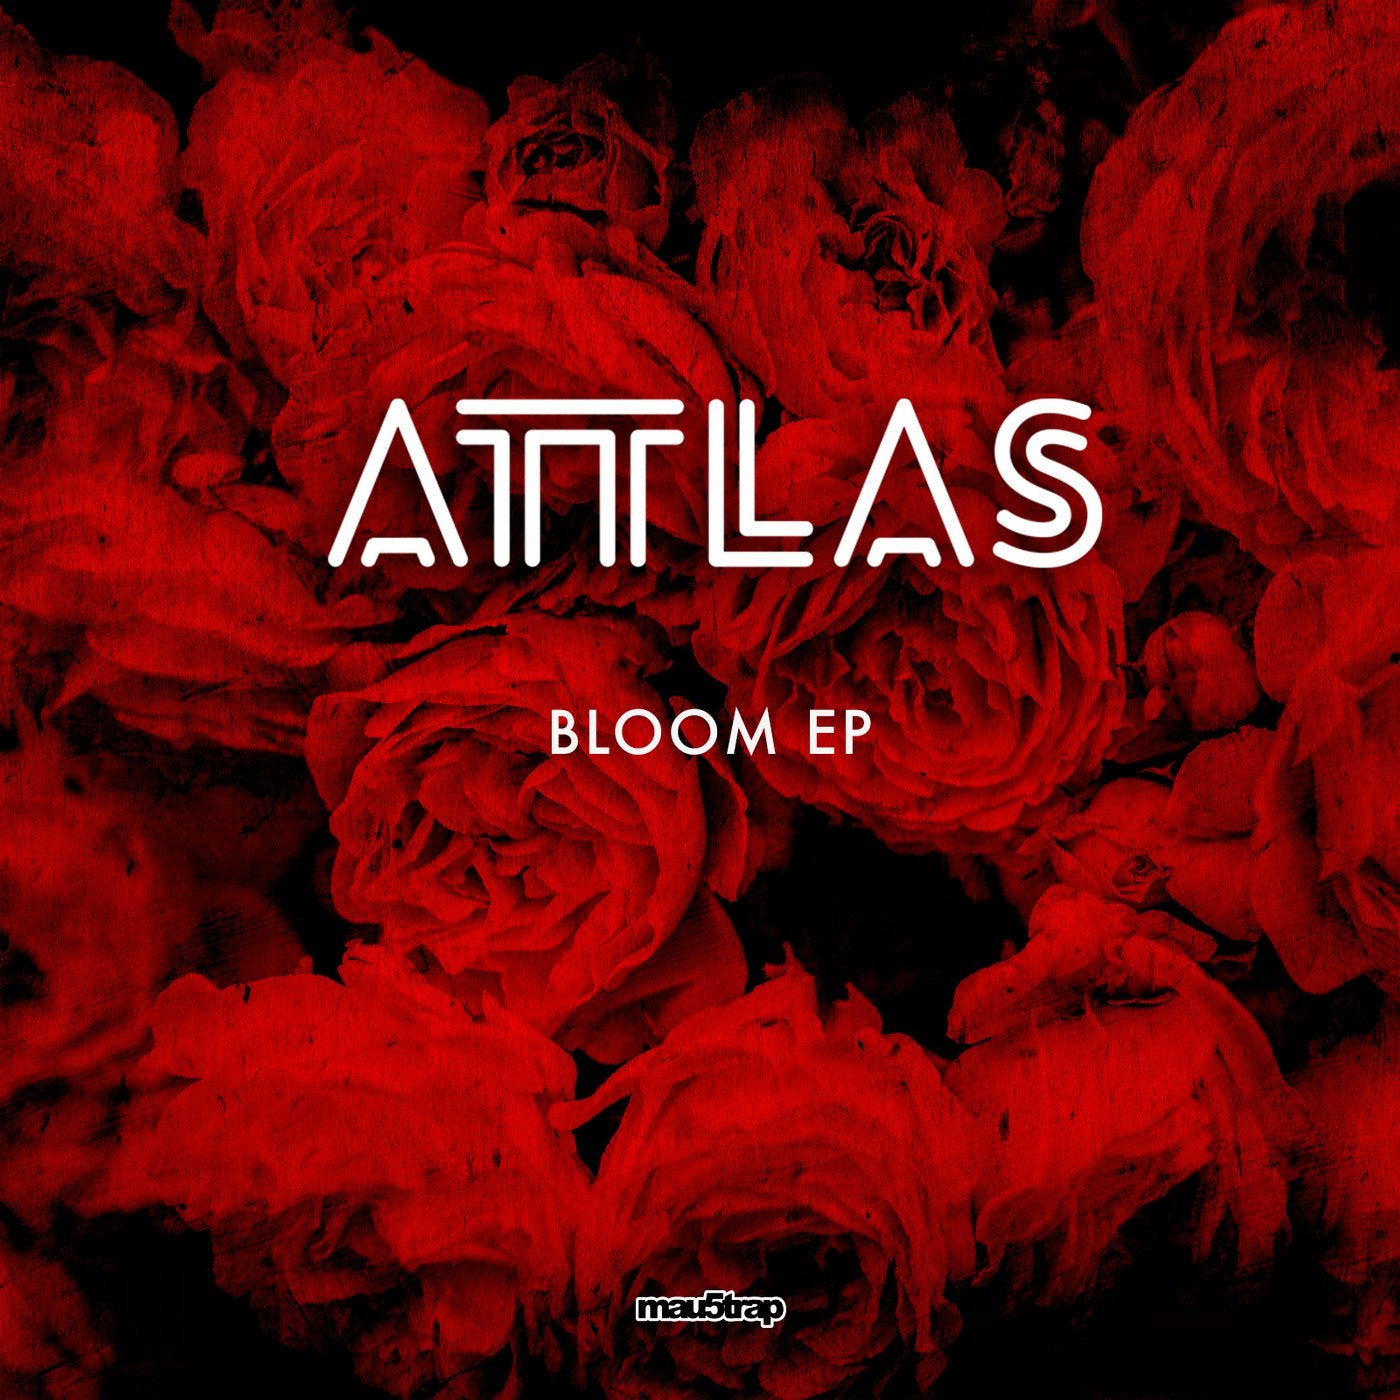 Bloom EP